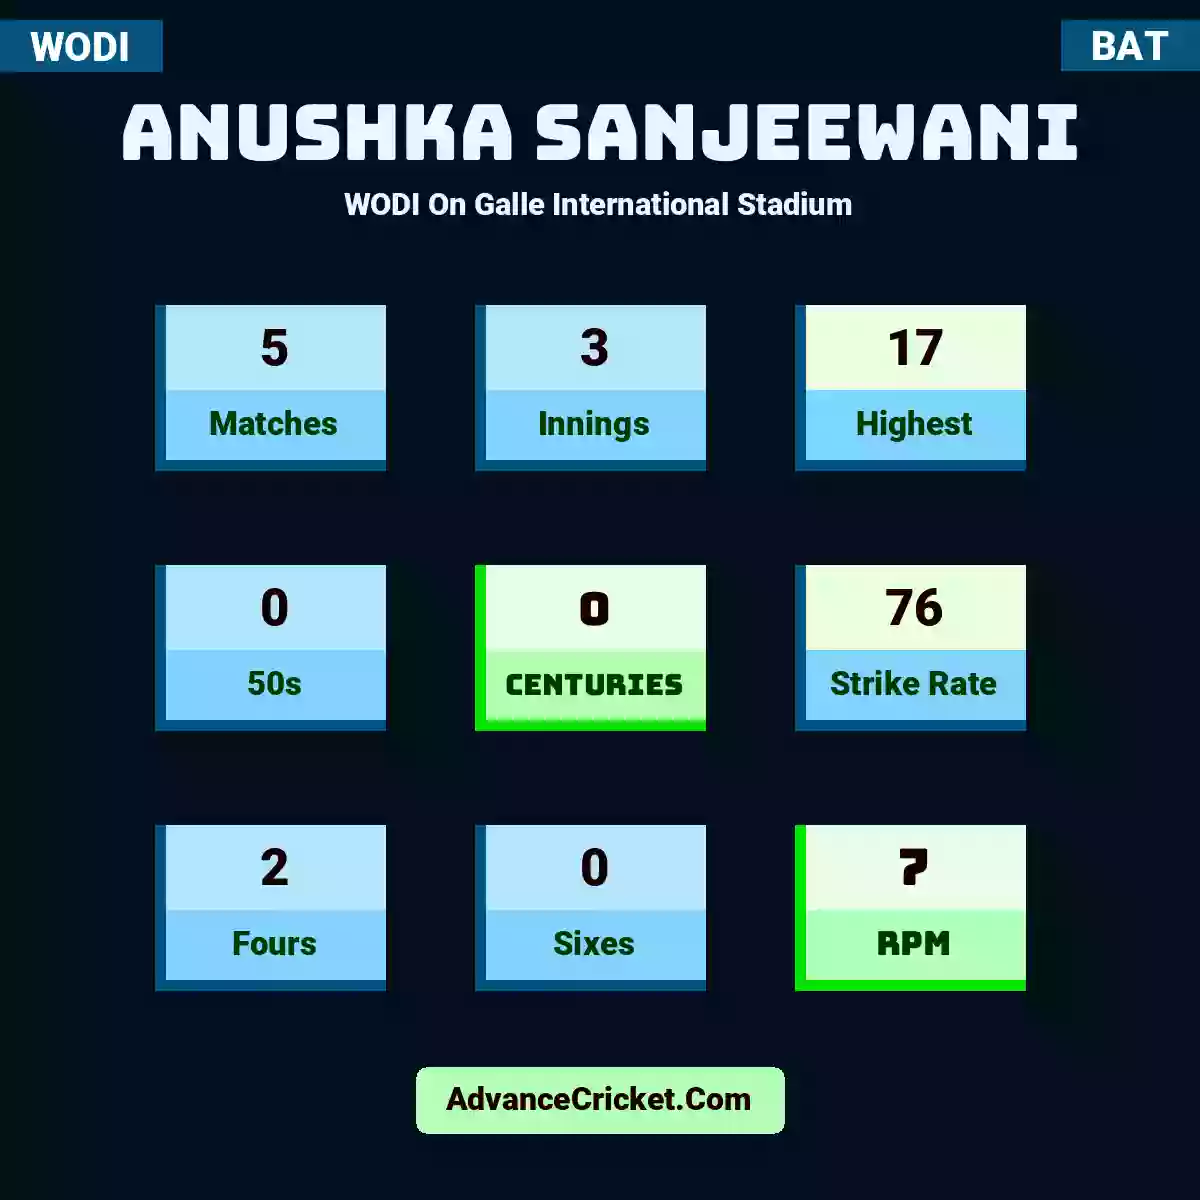 Anushka Sanjeewani WODI  On Galle International Stadium, Anushka Sanjeewani played 5 matches, scored 17 runs as highest, 0 half-centuries, and 0 centuries, with a strike rate of 76. A.Sanjeewani hit 2 fours and 0 sixes, with an RPM of 7.